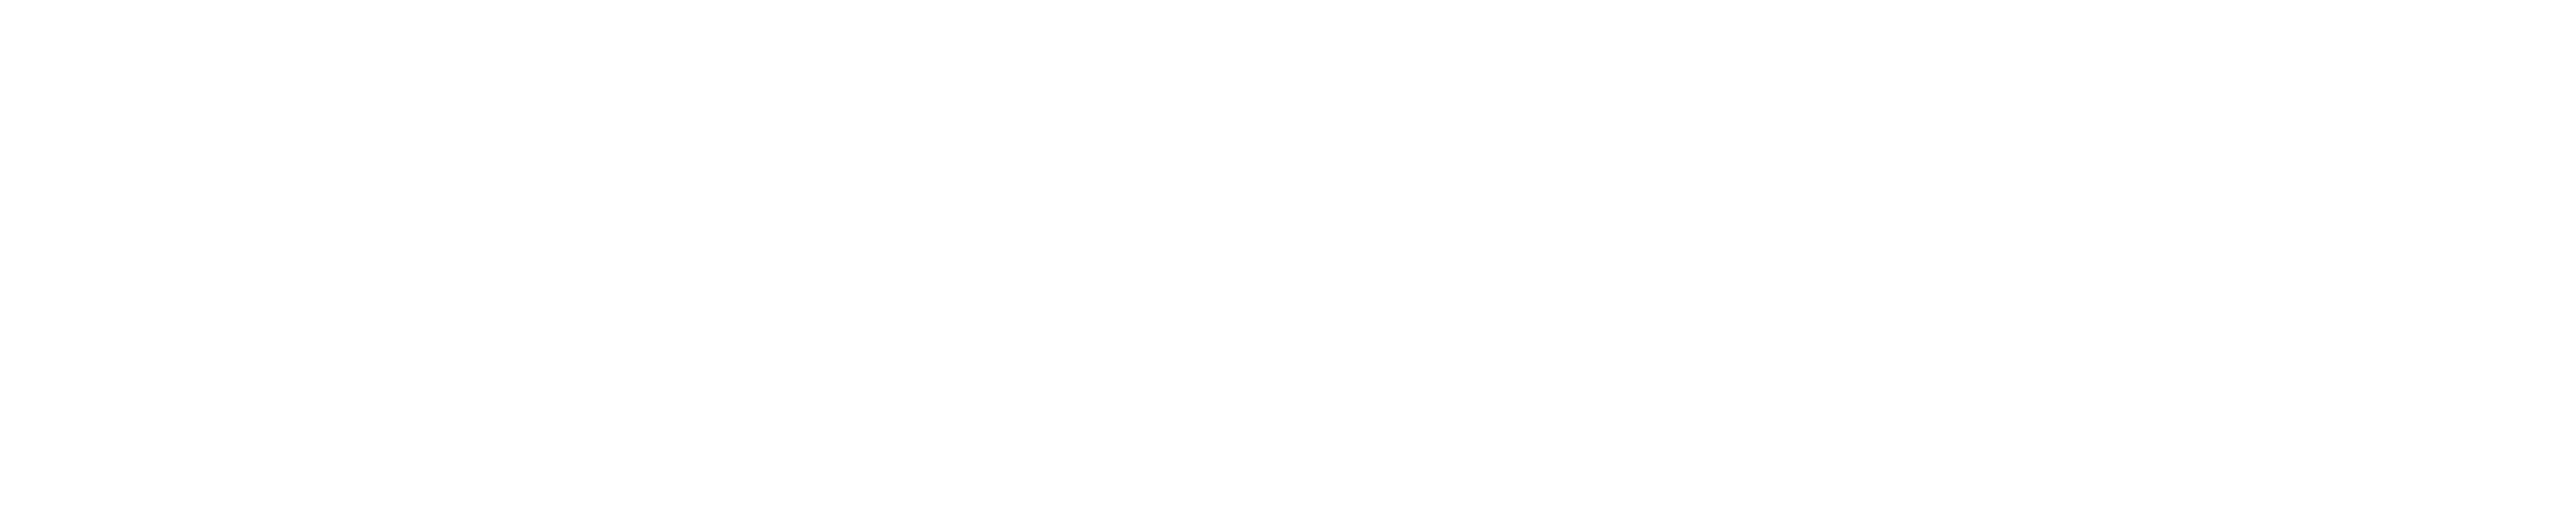 lakestream media logo valge